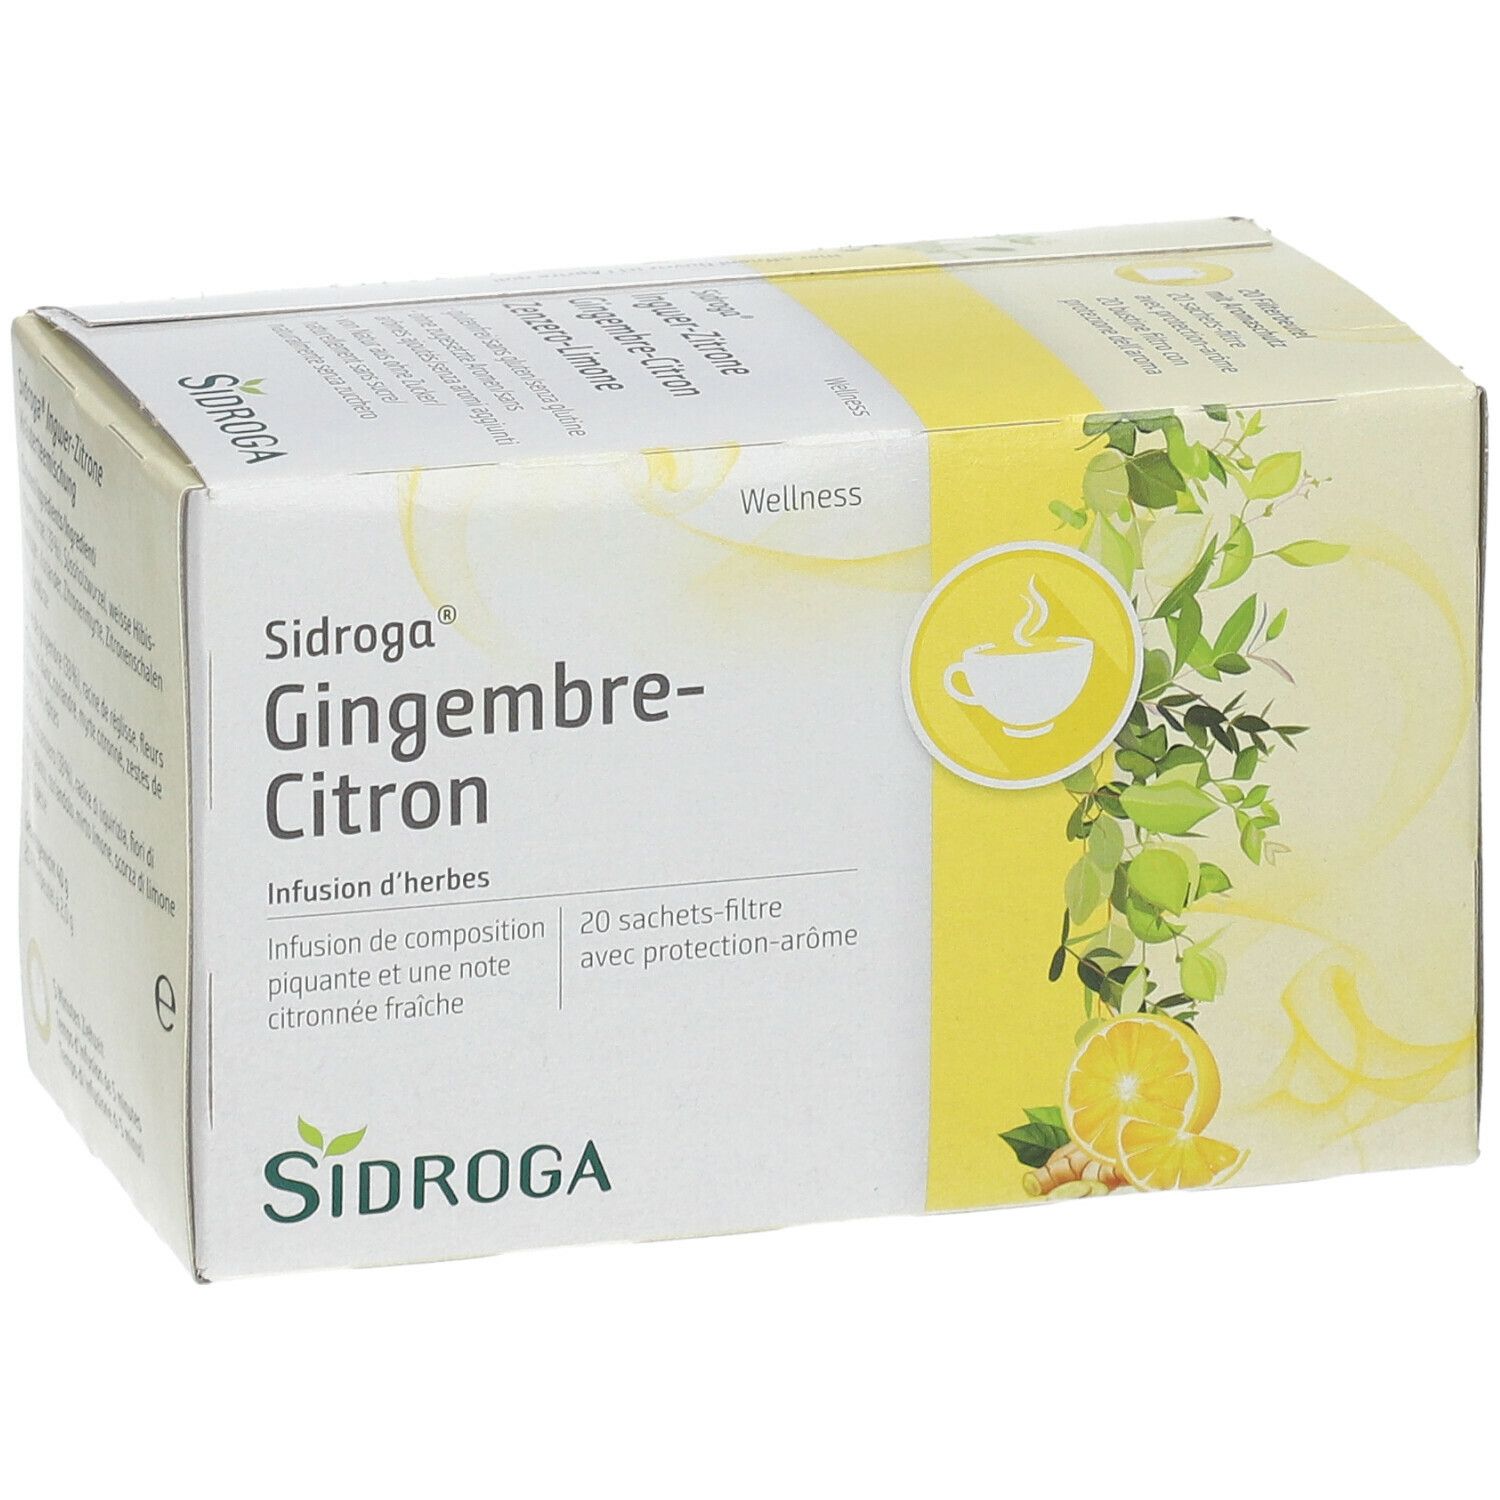 Sidroga® Wellness Ingwer-Zitrone